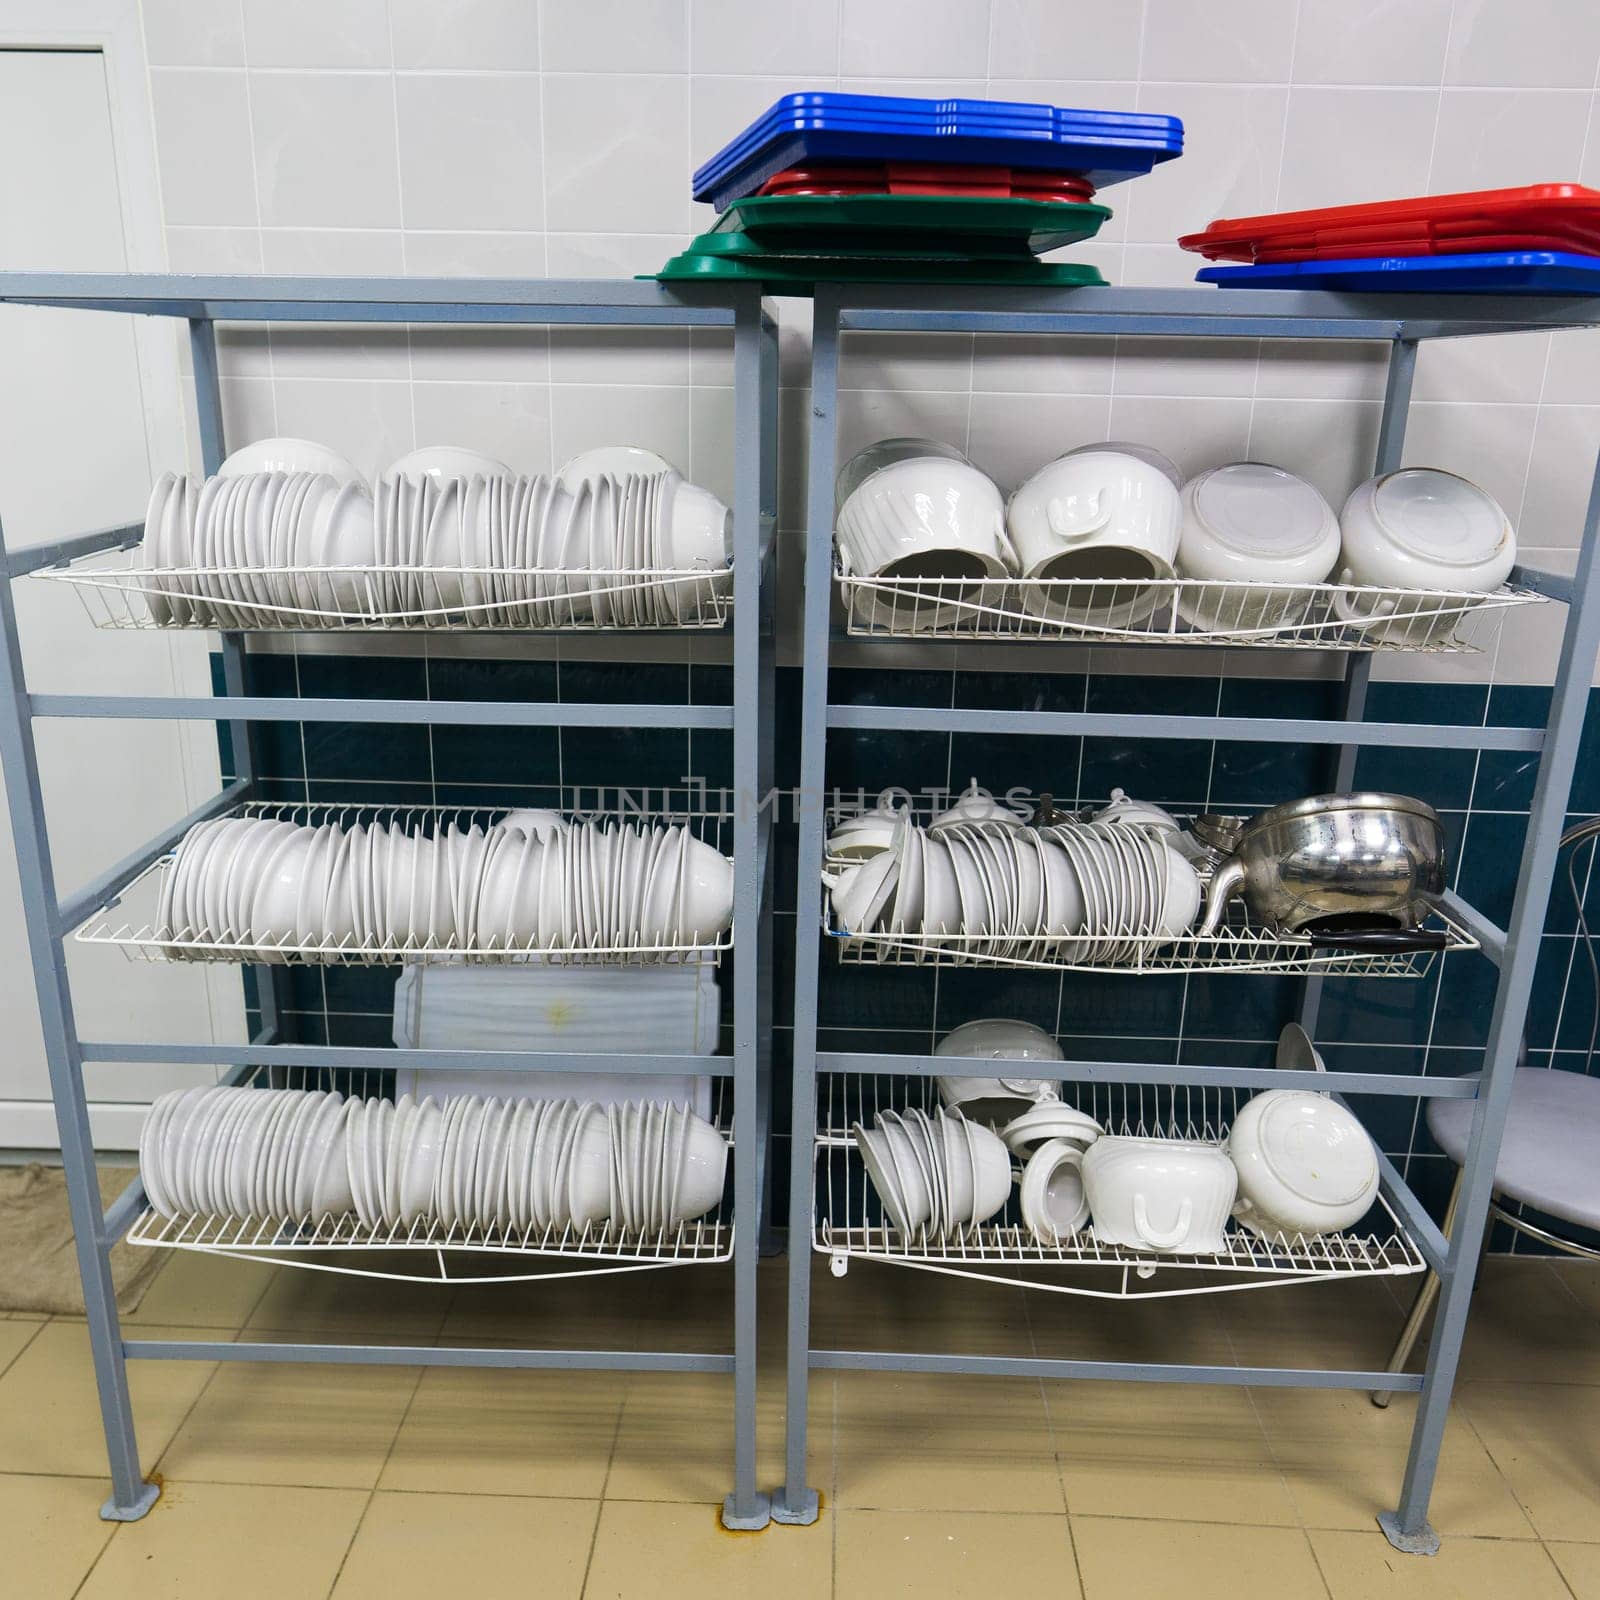 Restaurant kitchen equipment for preparing food, meal, plates, detail. by Zelenin